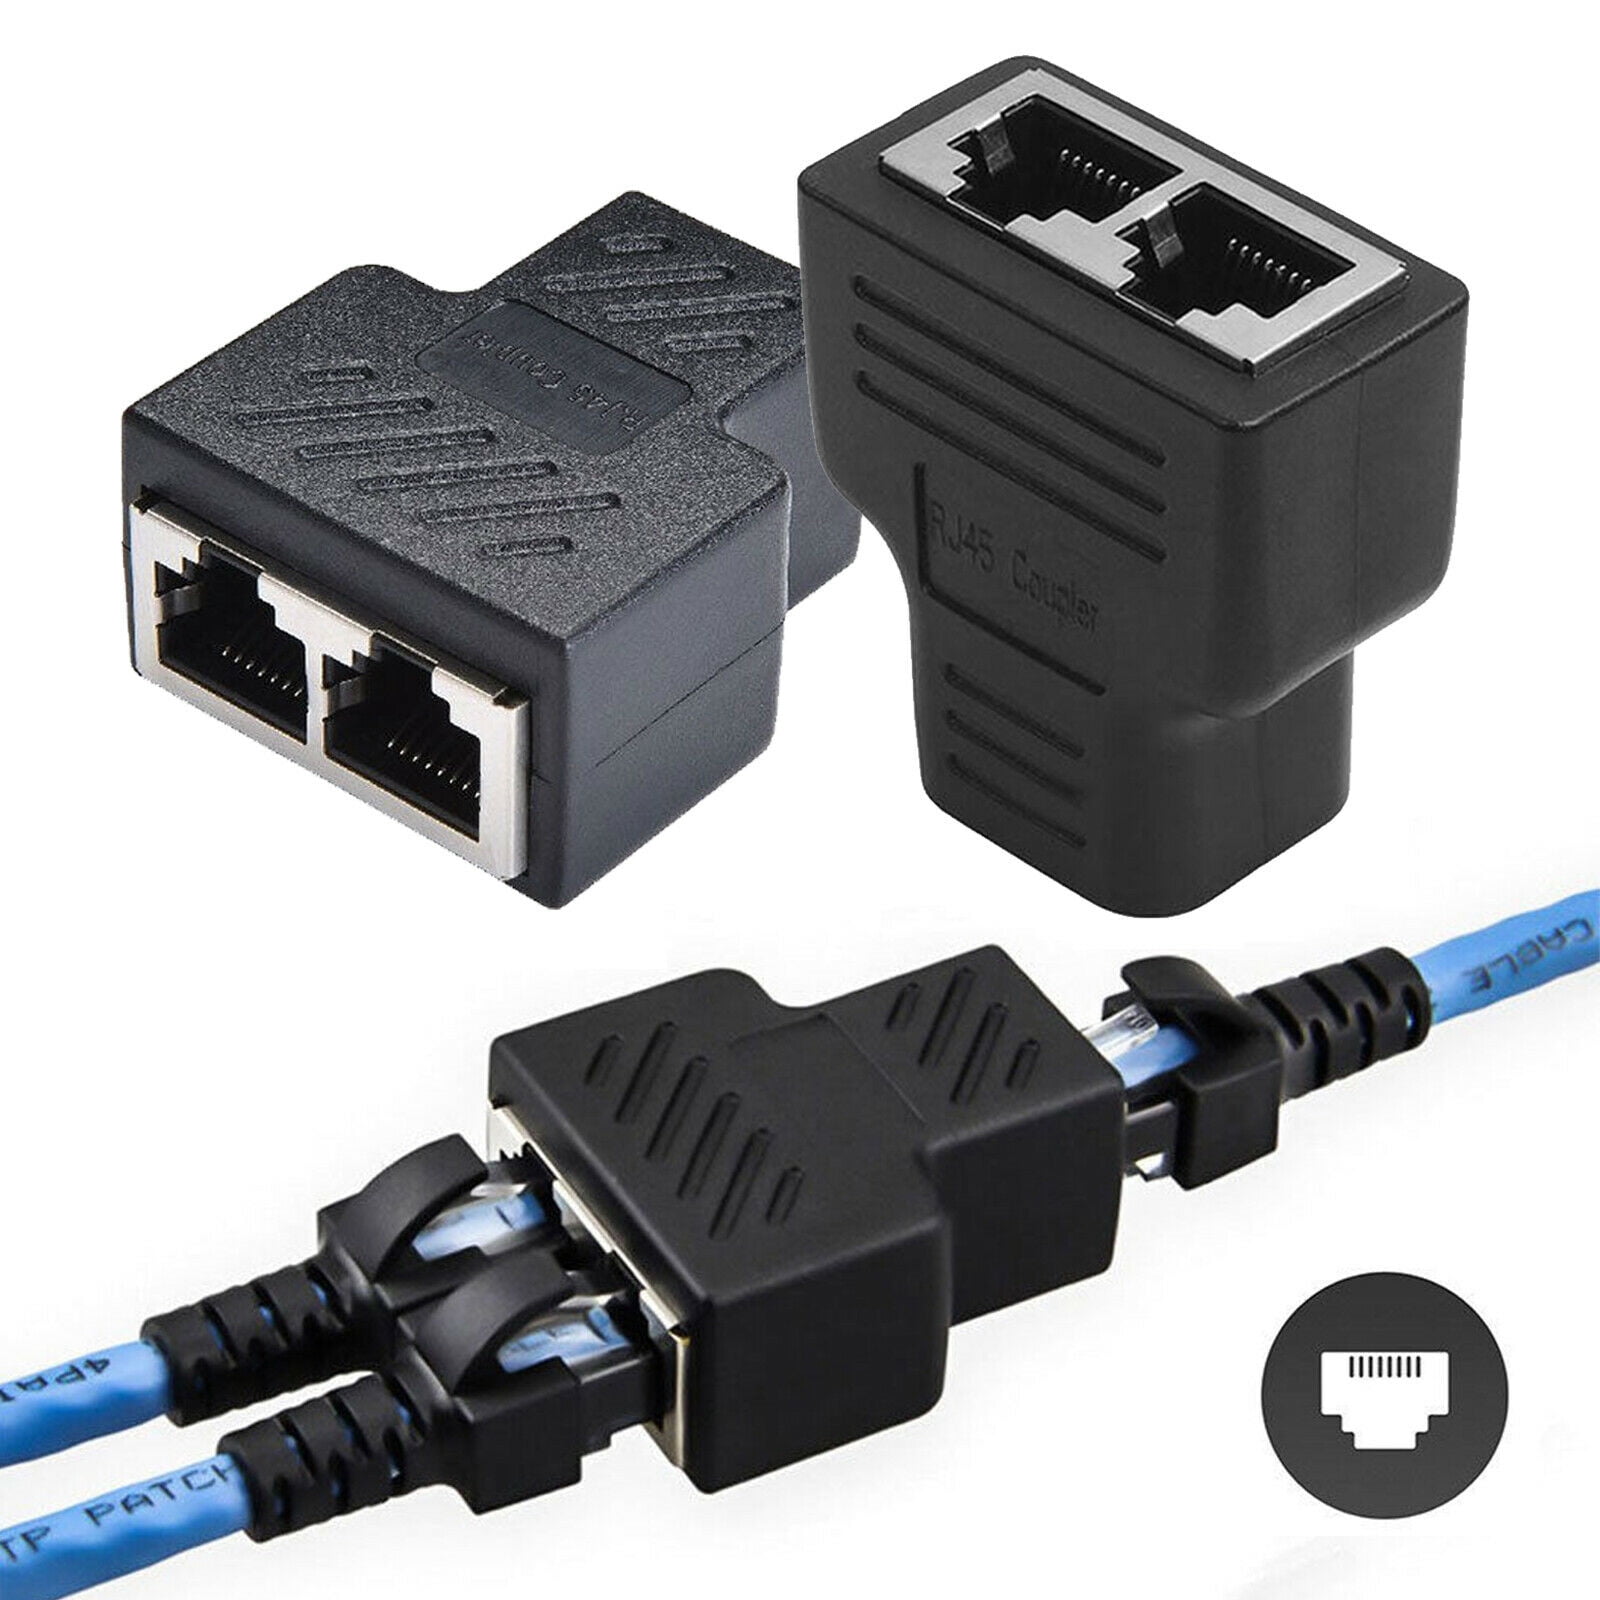 Tripp Lite 2-to-1 RJ45 Splitter Adapter Cable, 10/100 Ethernet Cat5/Cat5e  (M/2xF), 6 in. - network splitter - 6 in 